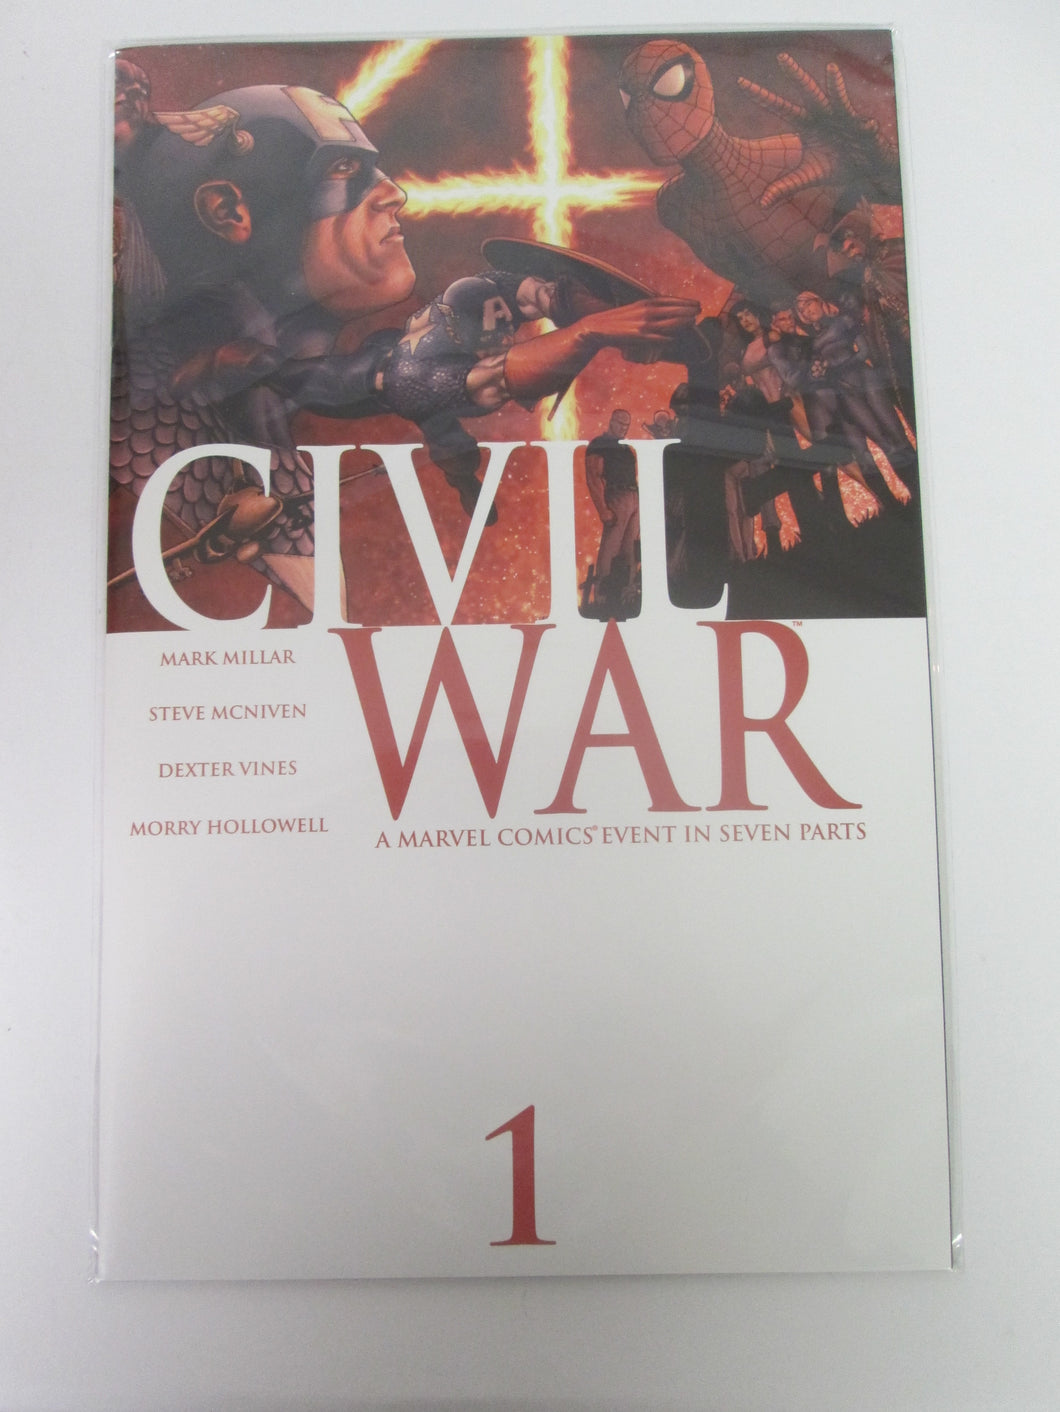 Civil War # 1 (Marvel)